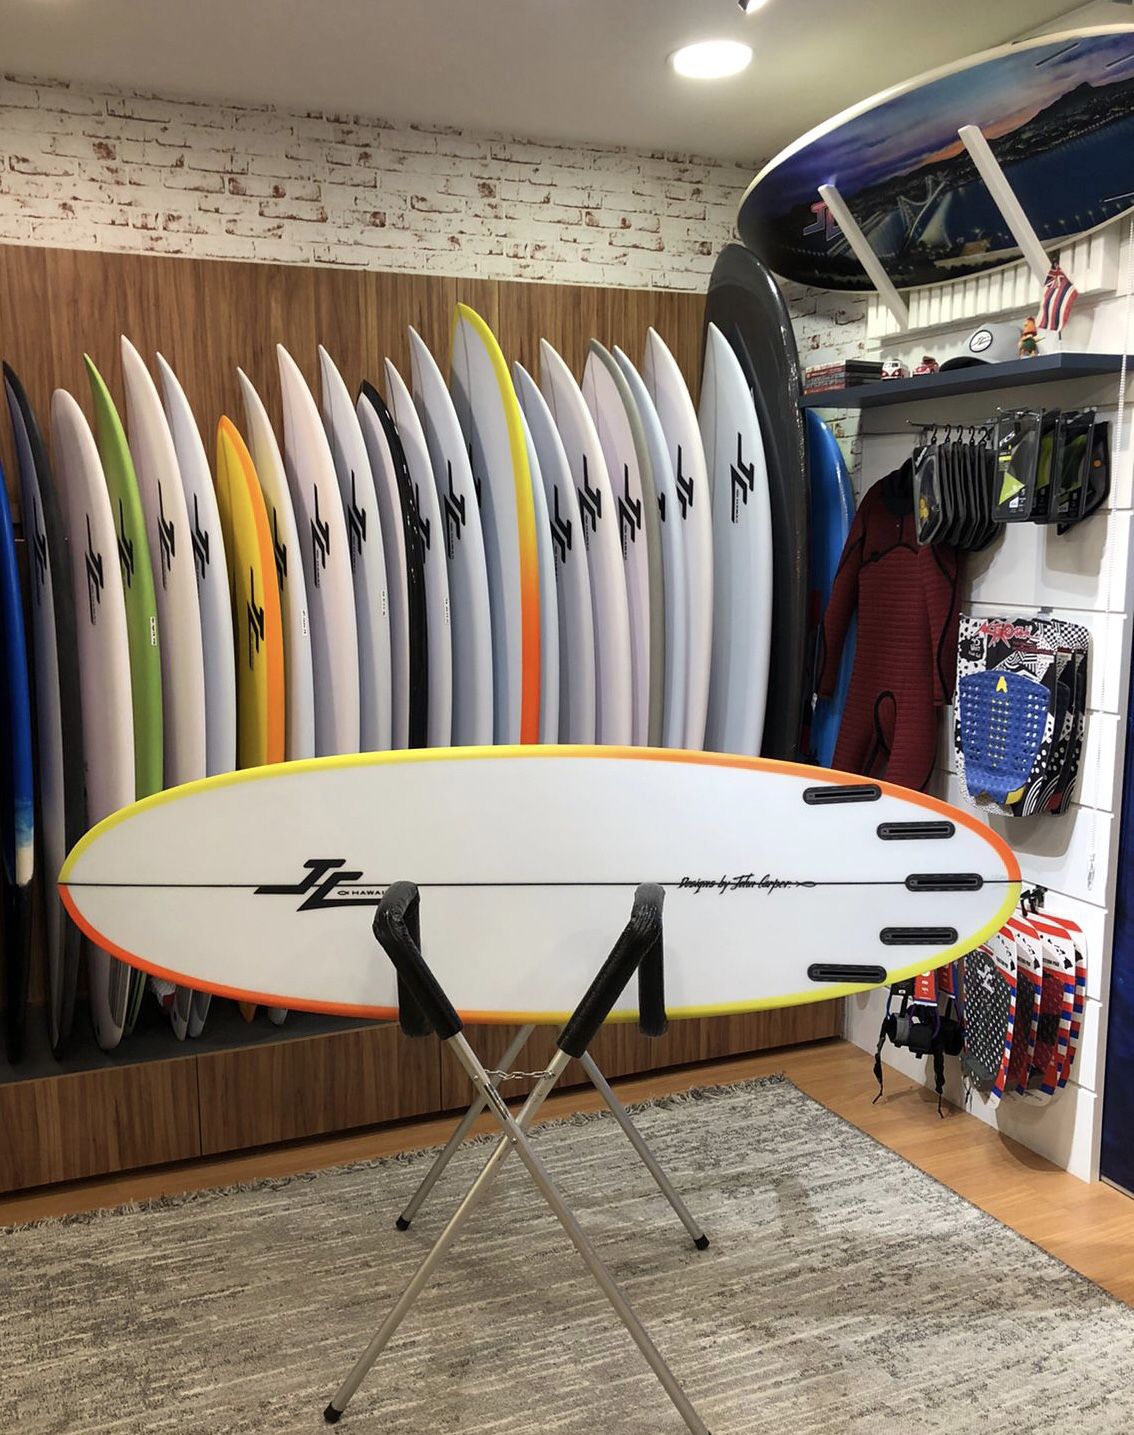 New Surfboard